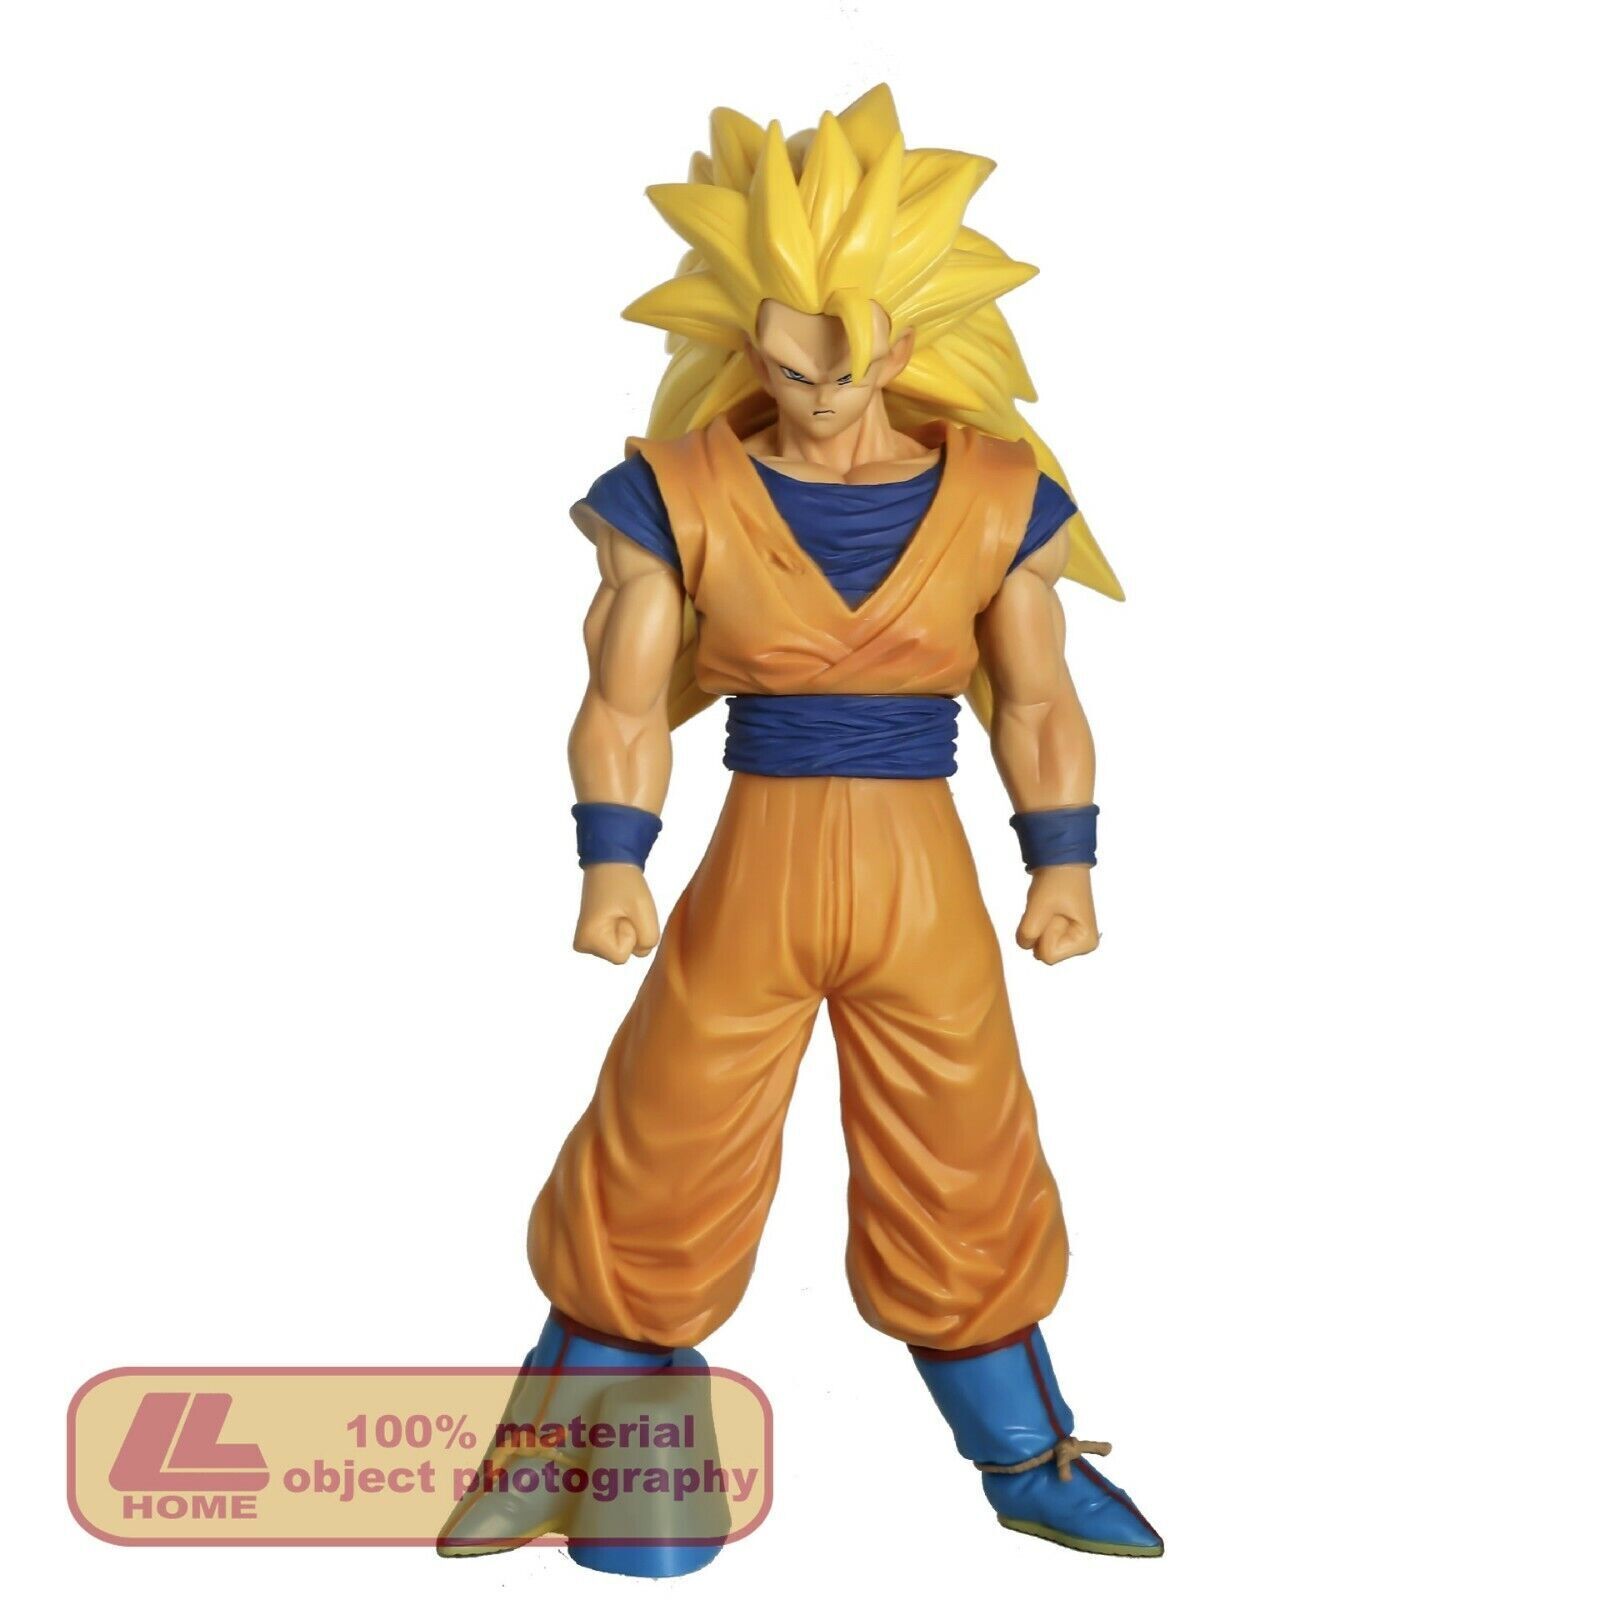 Anime DBZ Dragon Ball Z Super Saiyan 3 Form Son Goku Big Figure Decor Toy Gift R